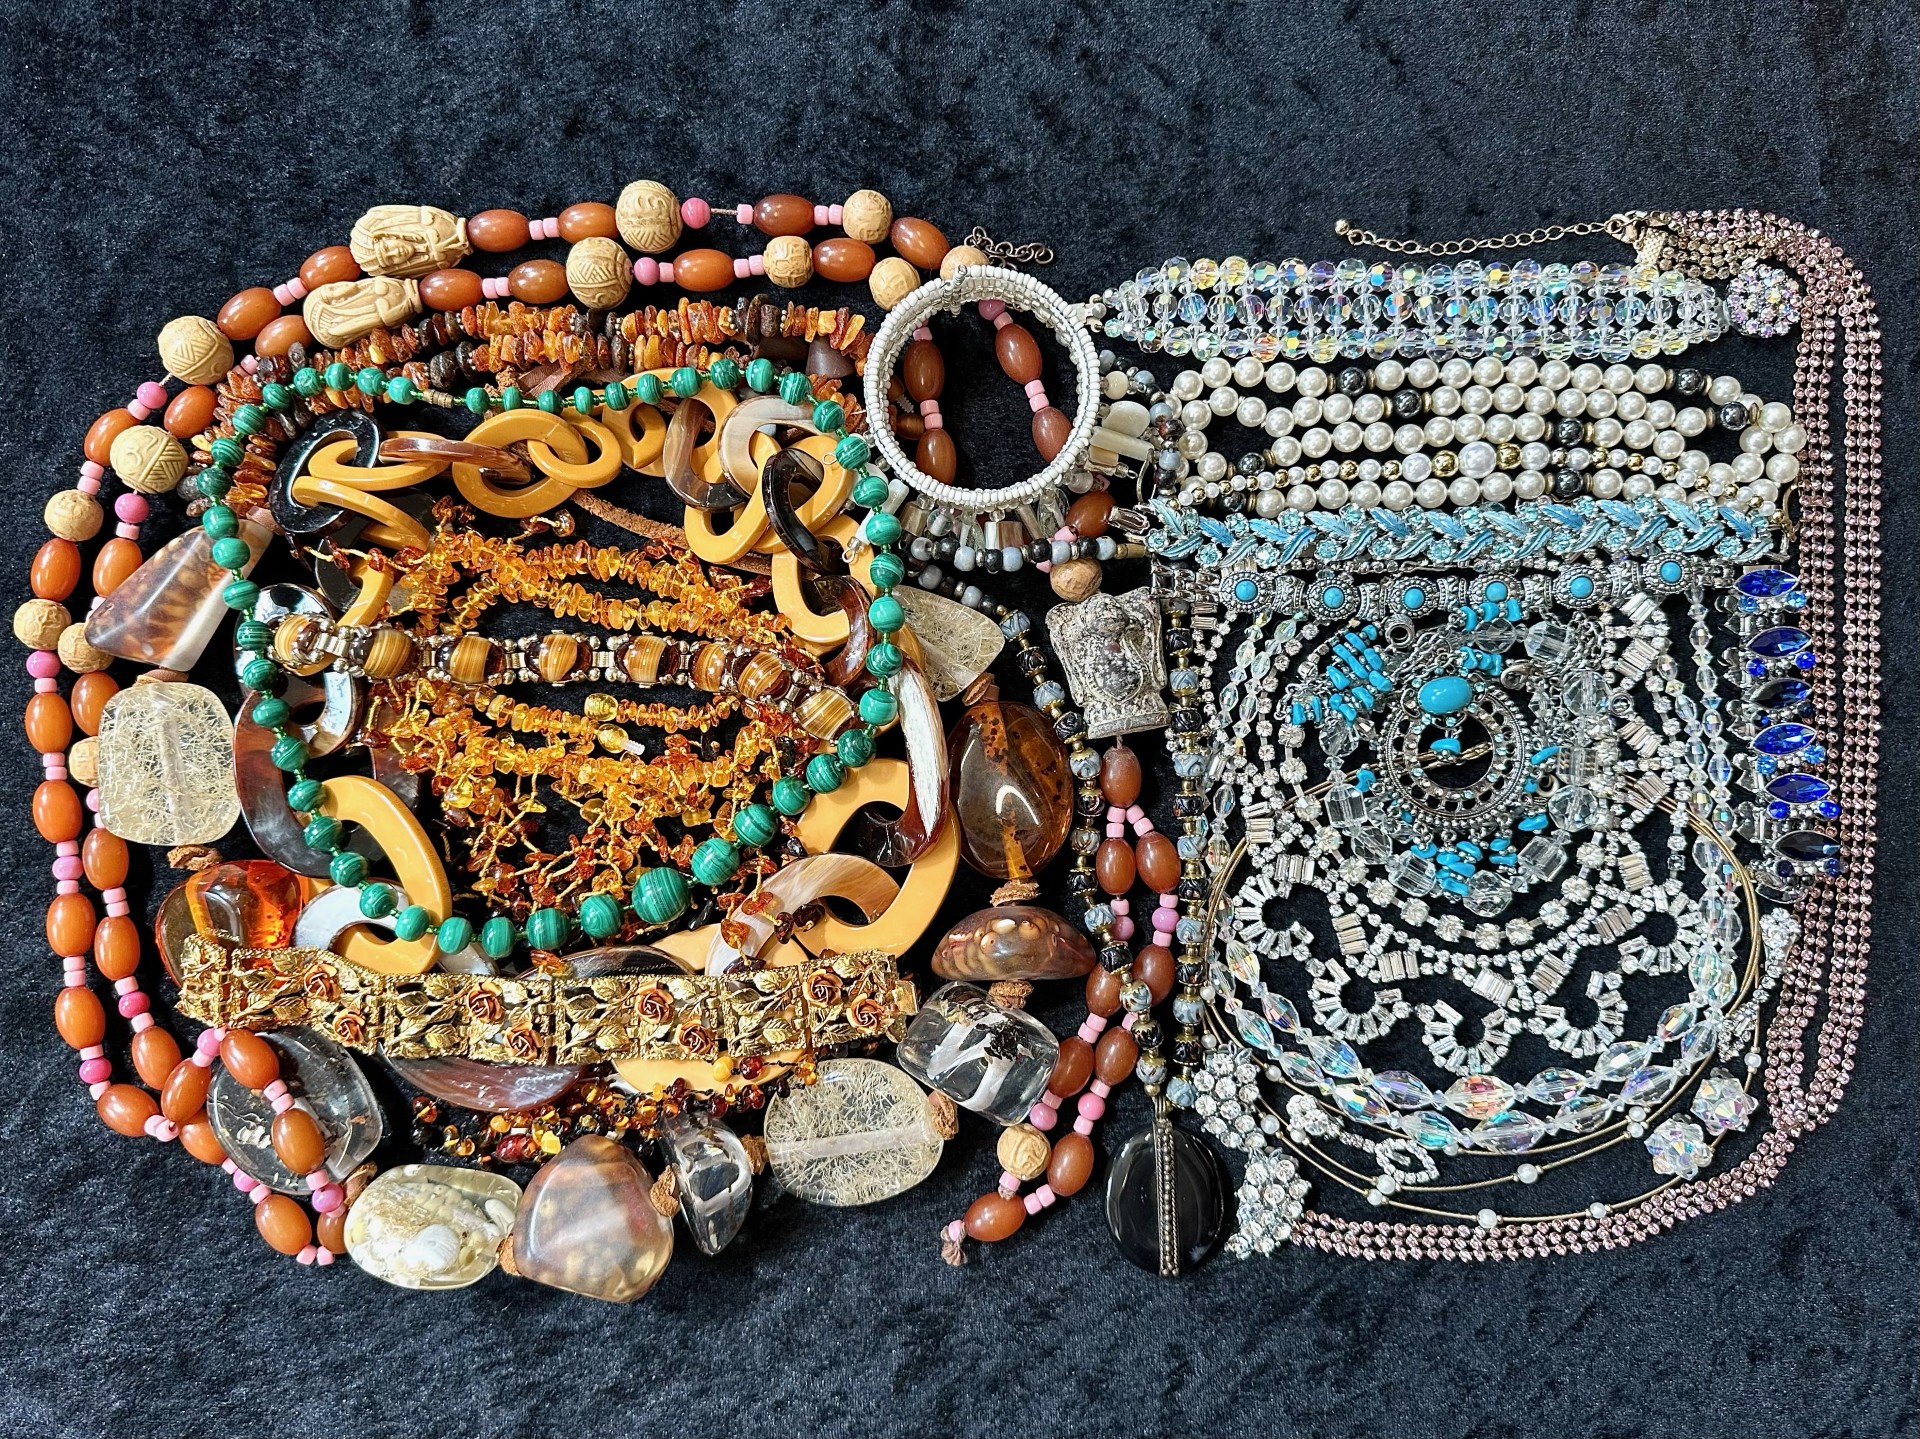 Costume jewellery amber - malachite - glass necklaces. large amount of costume jewellery,